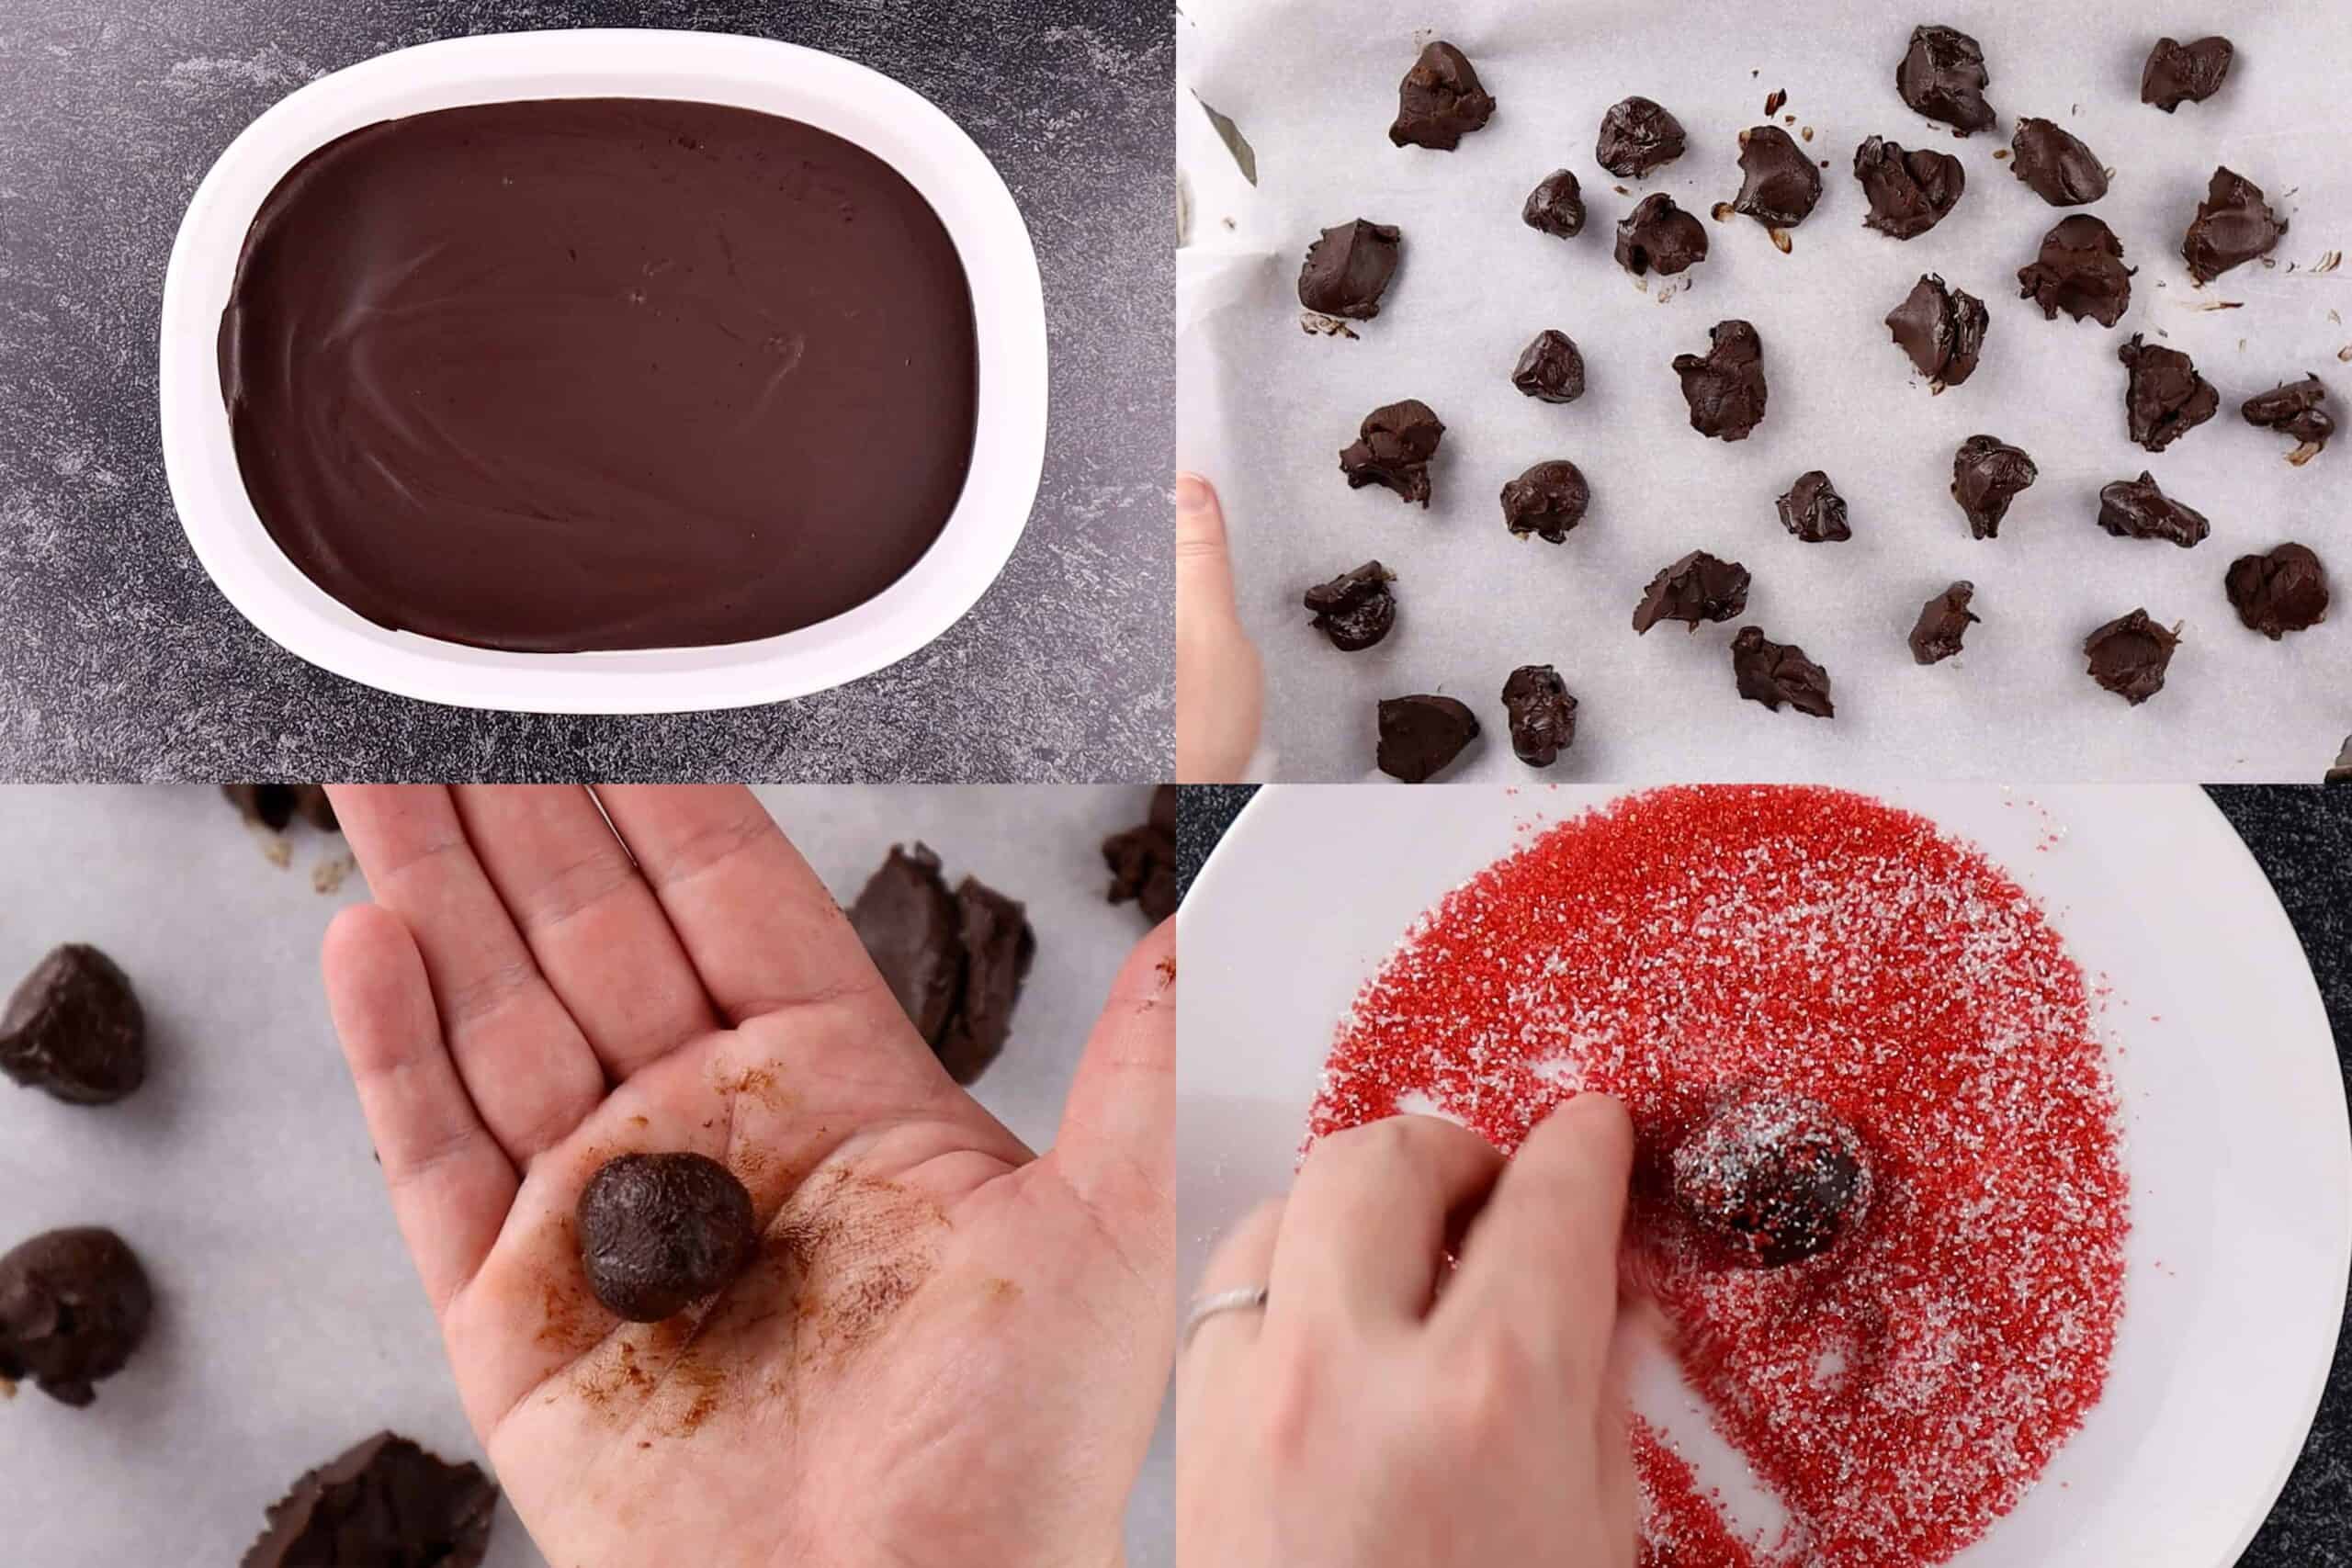 chocolate truffles proccess shot - forming into balls